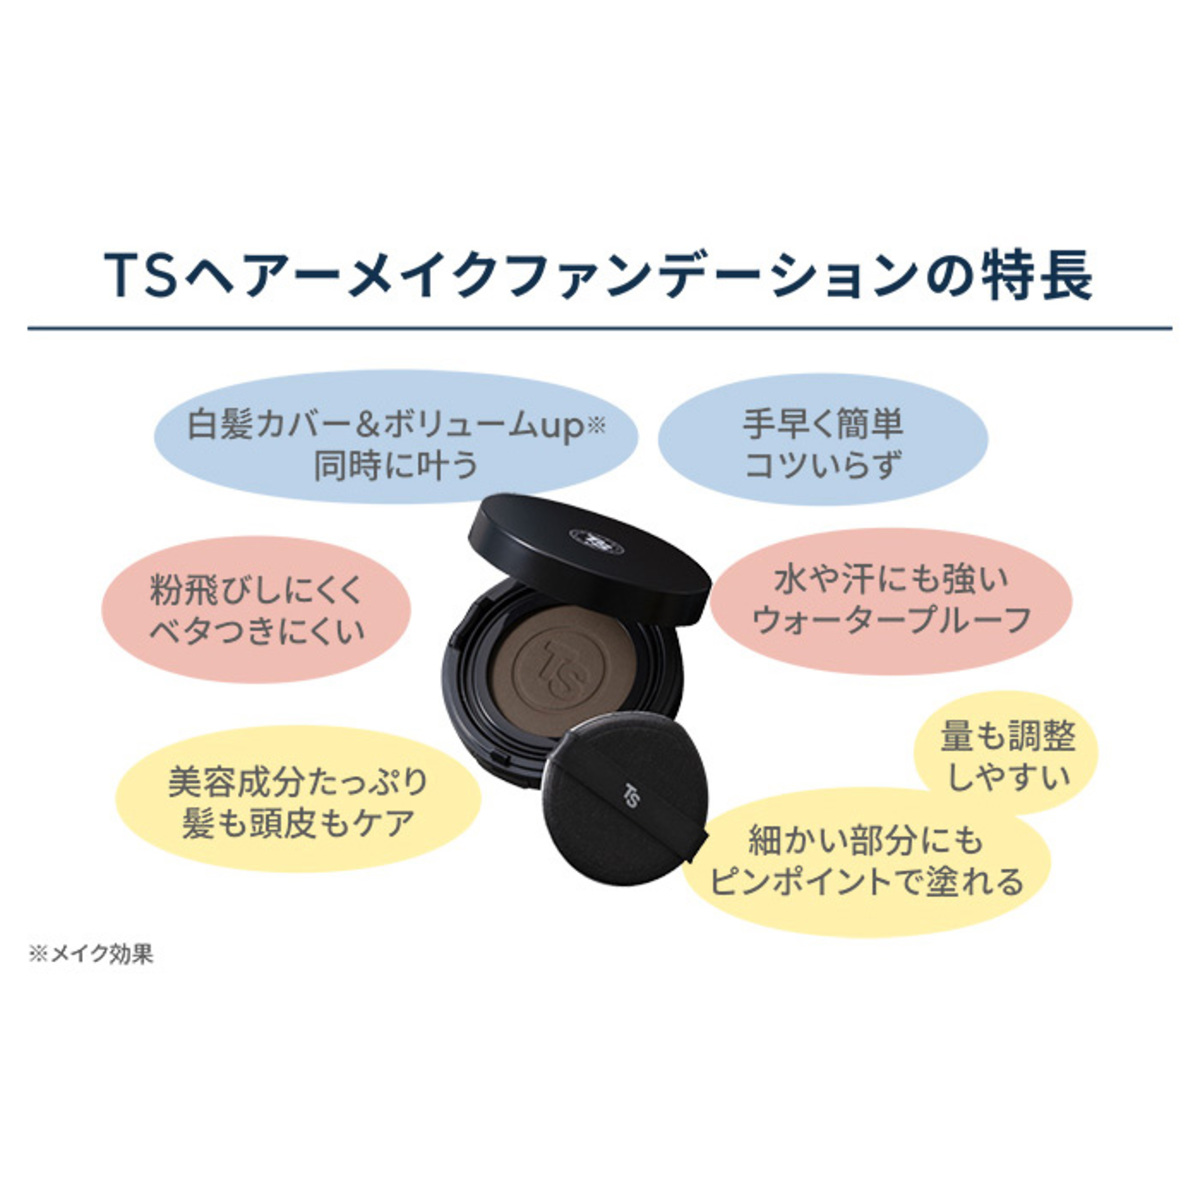 TSヘアーメイクファンデーション ティーエス（TS） - QVC.jp